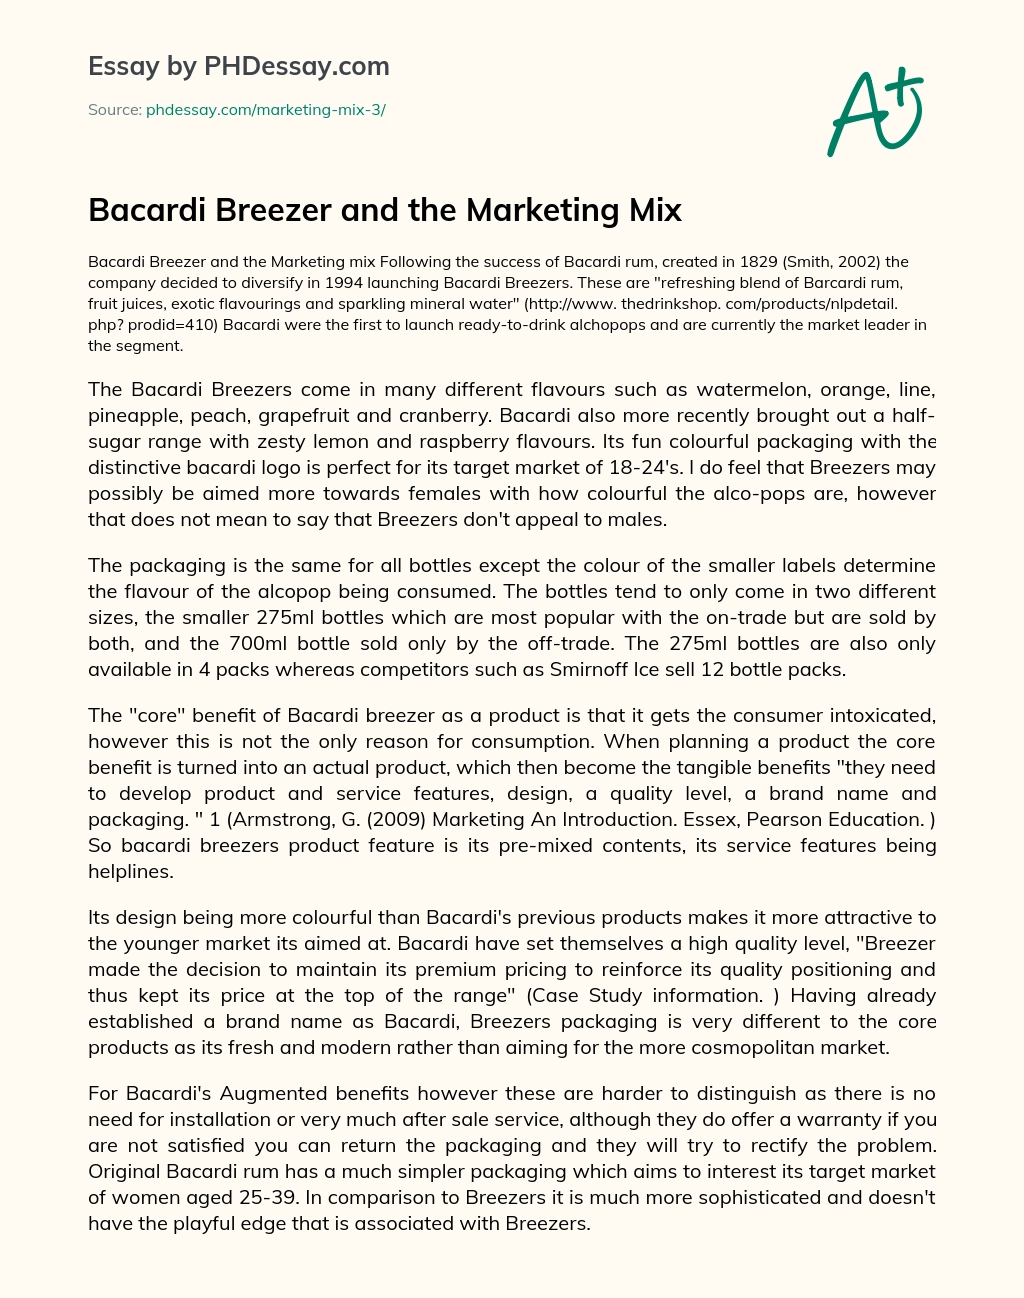 Bacardi Breezer and the Marketing Mix essay